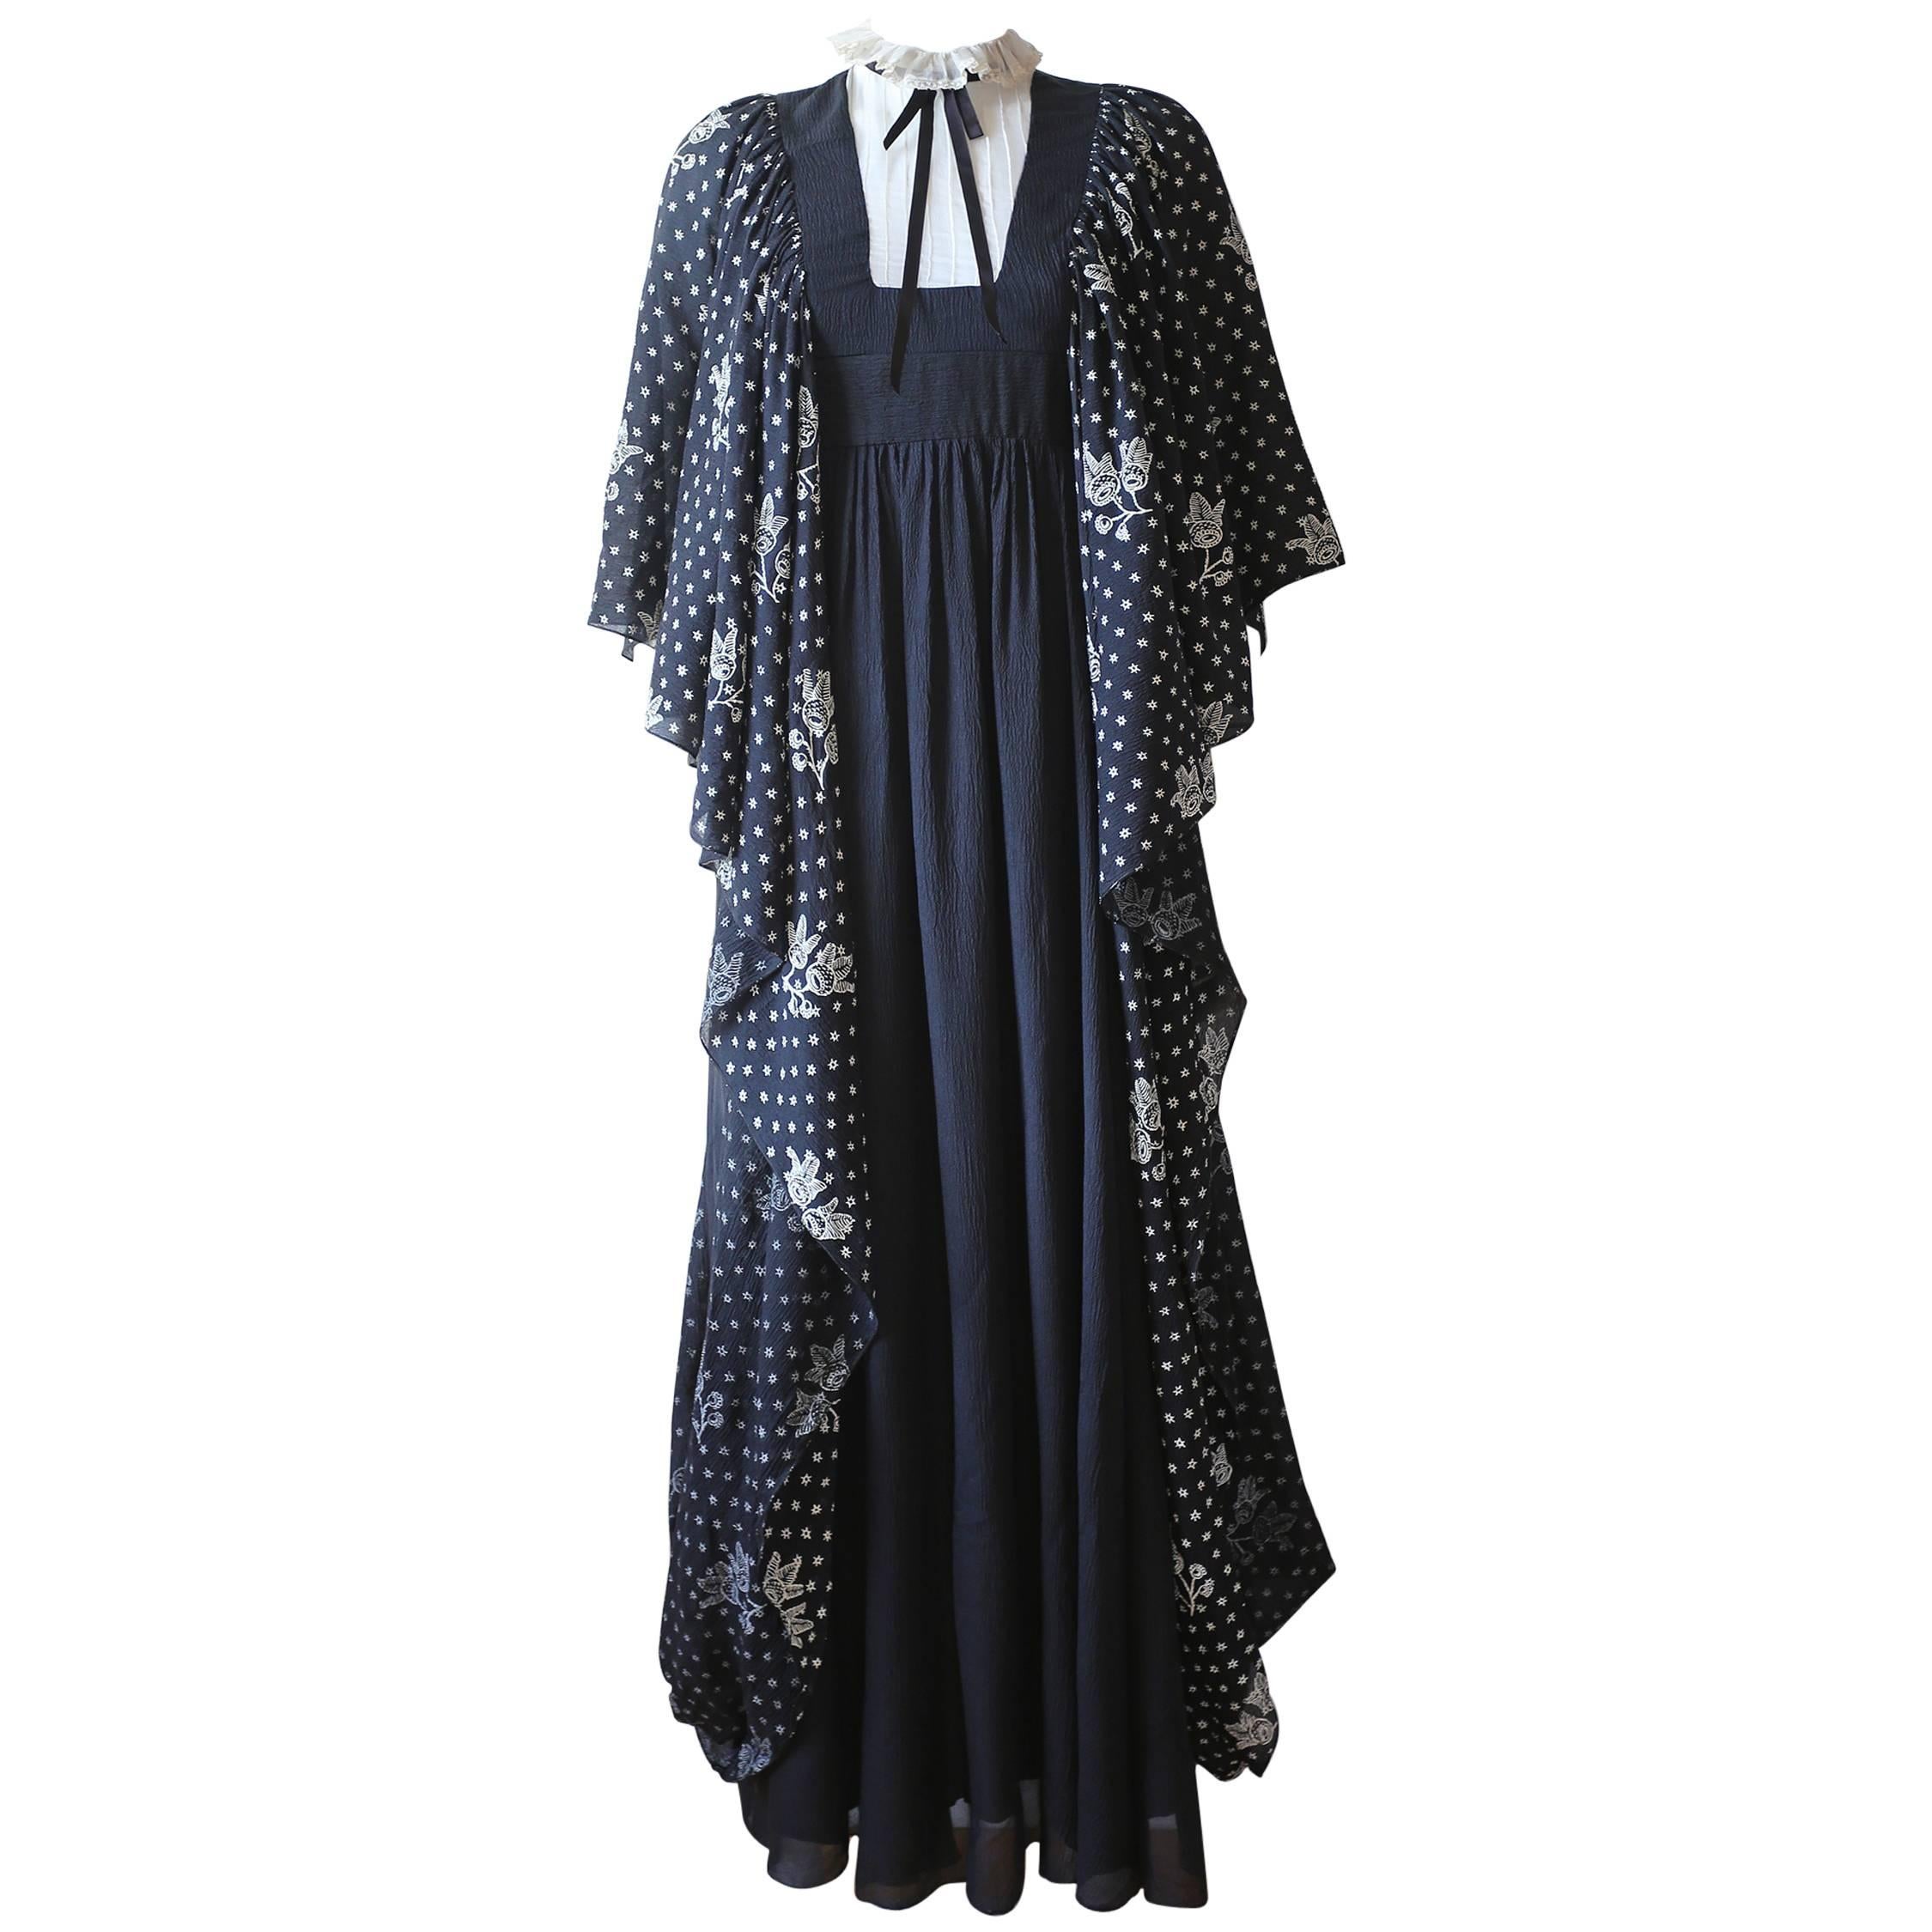 Gina Fratini crêpe-silk evening dress with star print, c. 1970